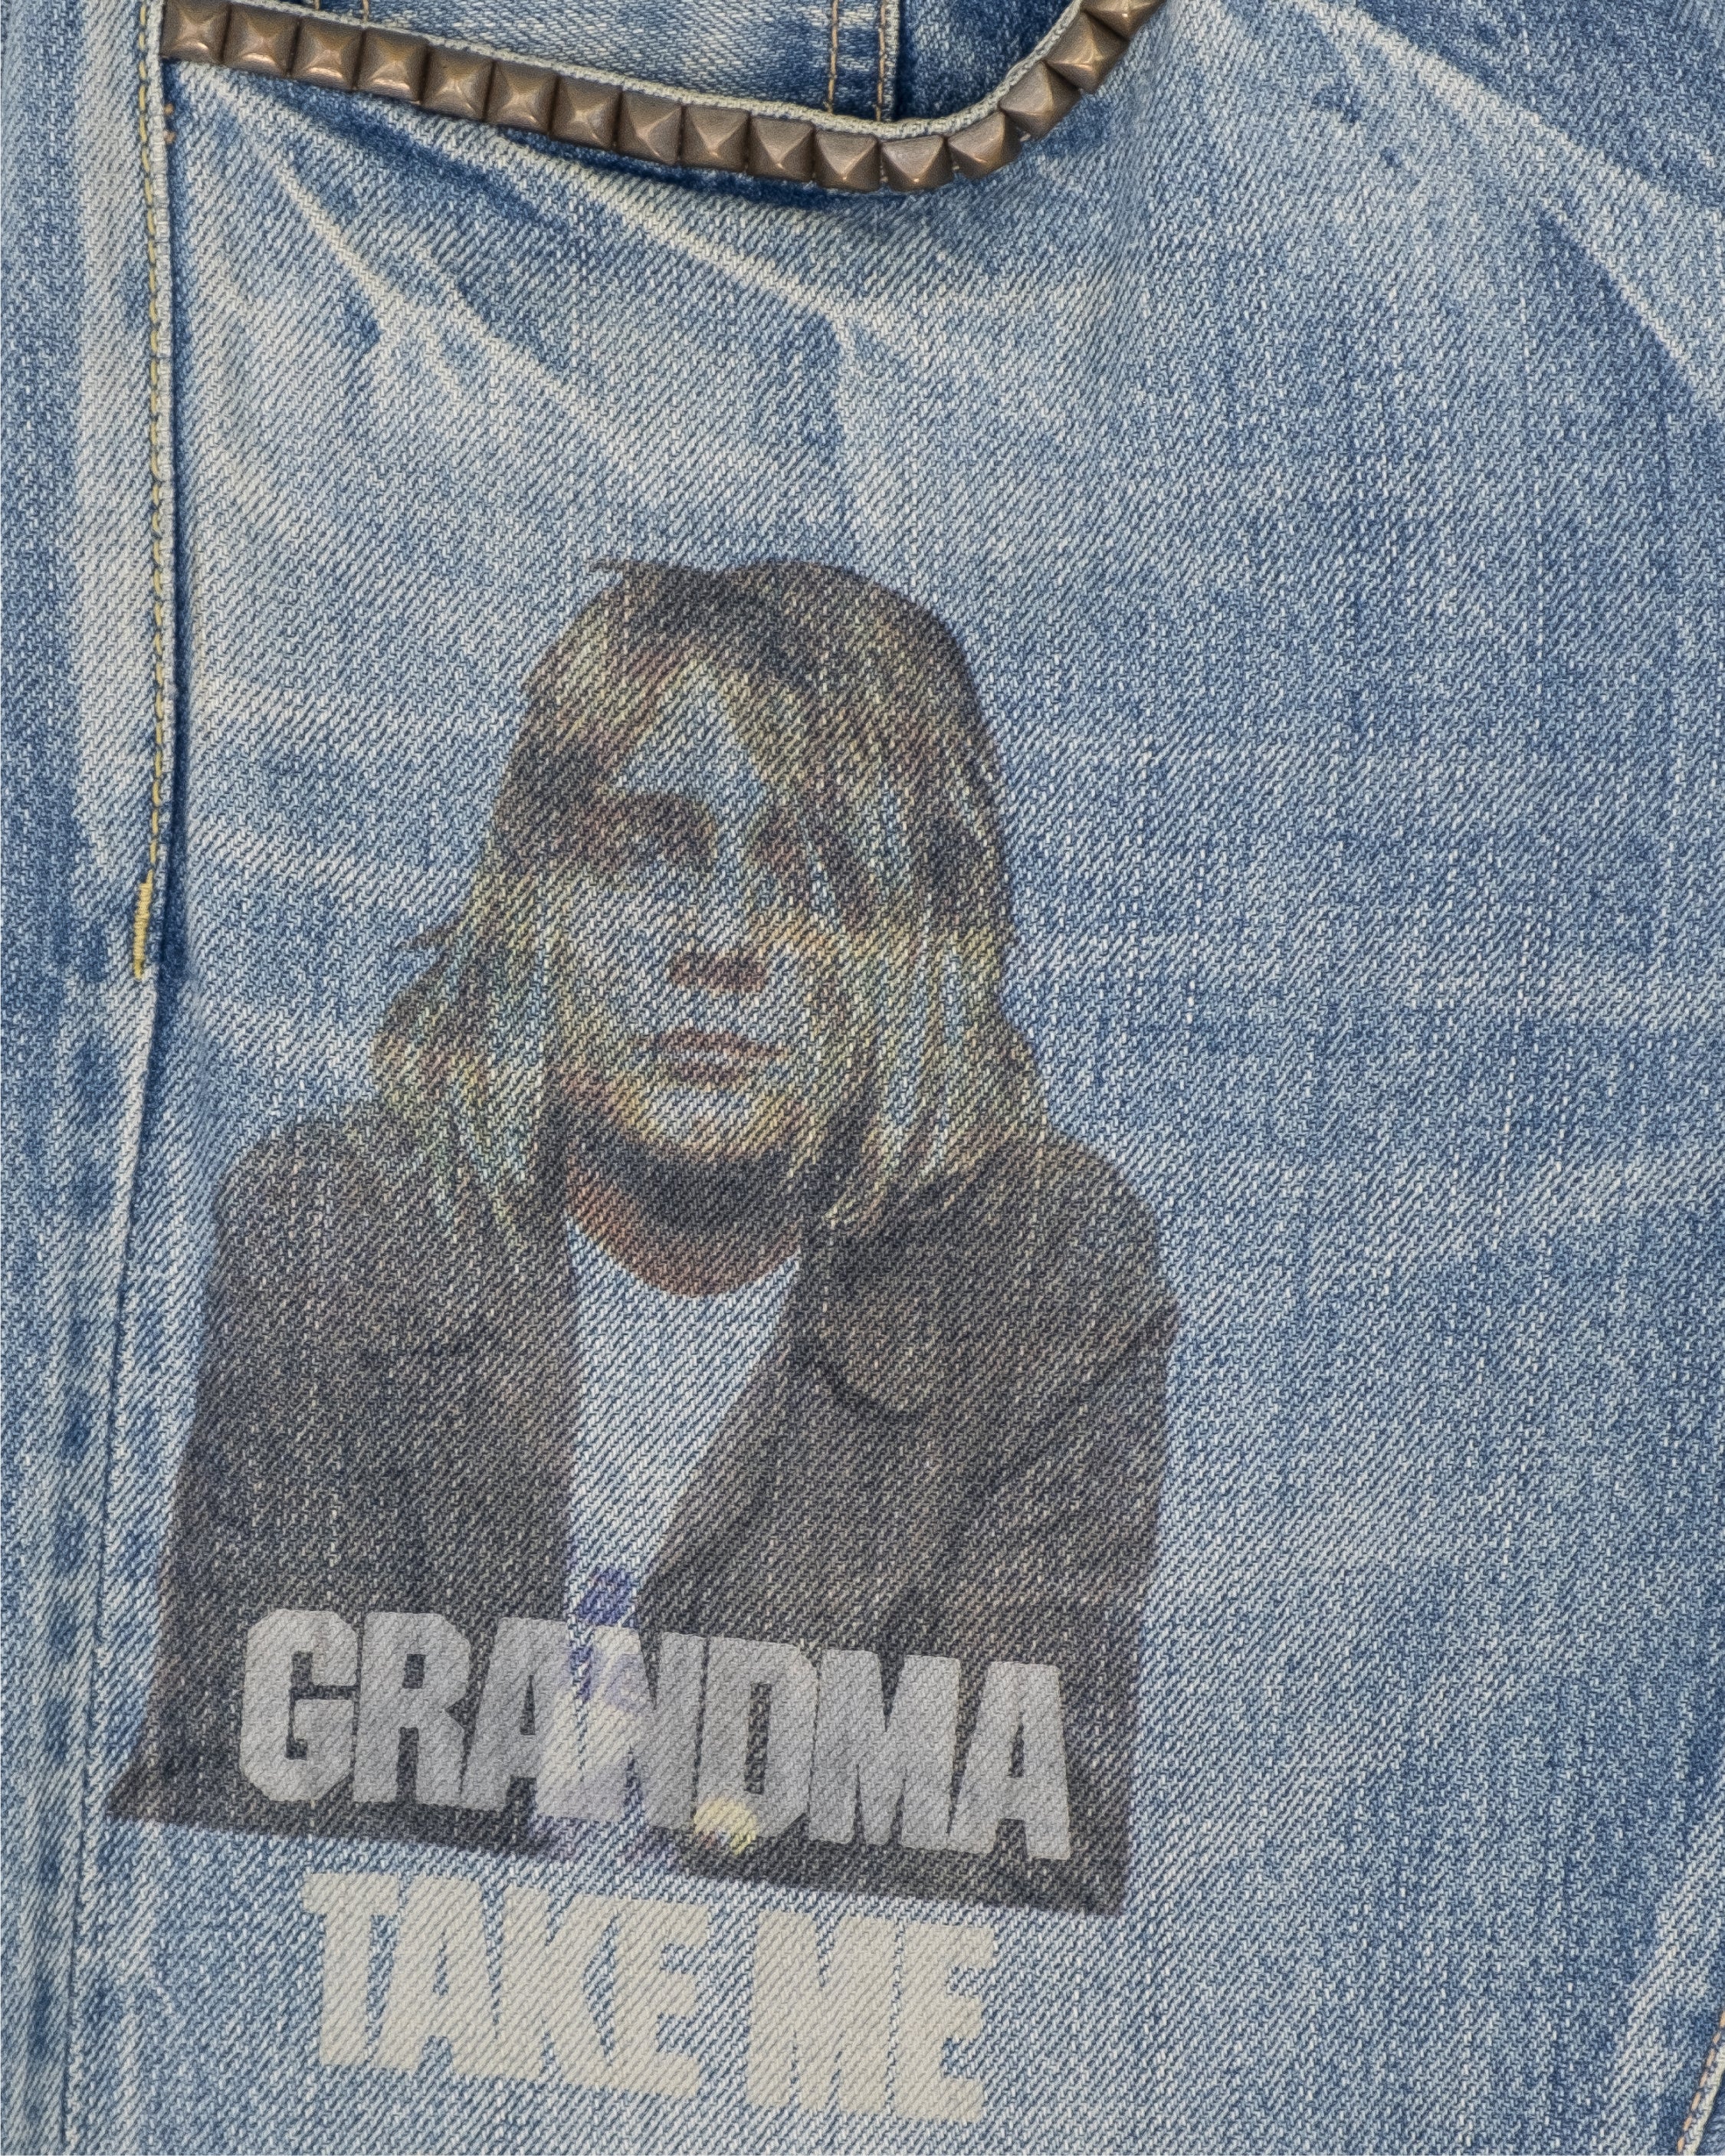 Nirvana Kurt Cobain Photo Patch Denim Jacket Denim Jacket 333583 |  Rockabilia Merch Store